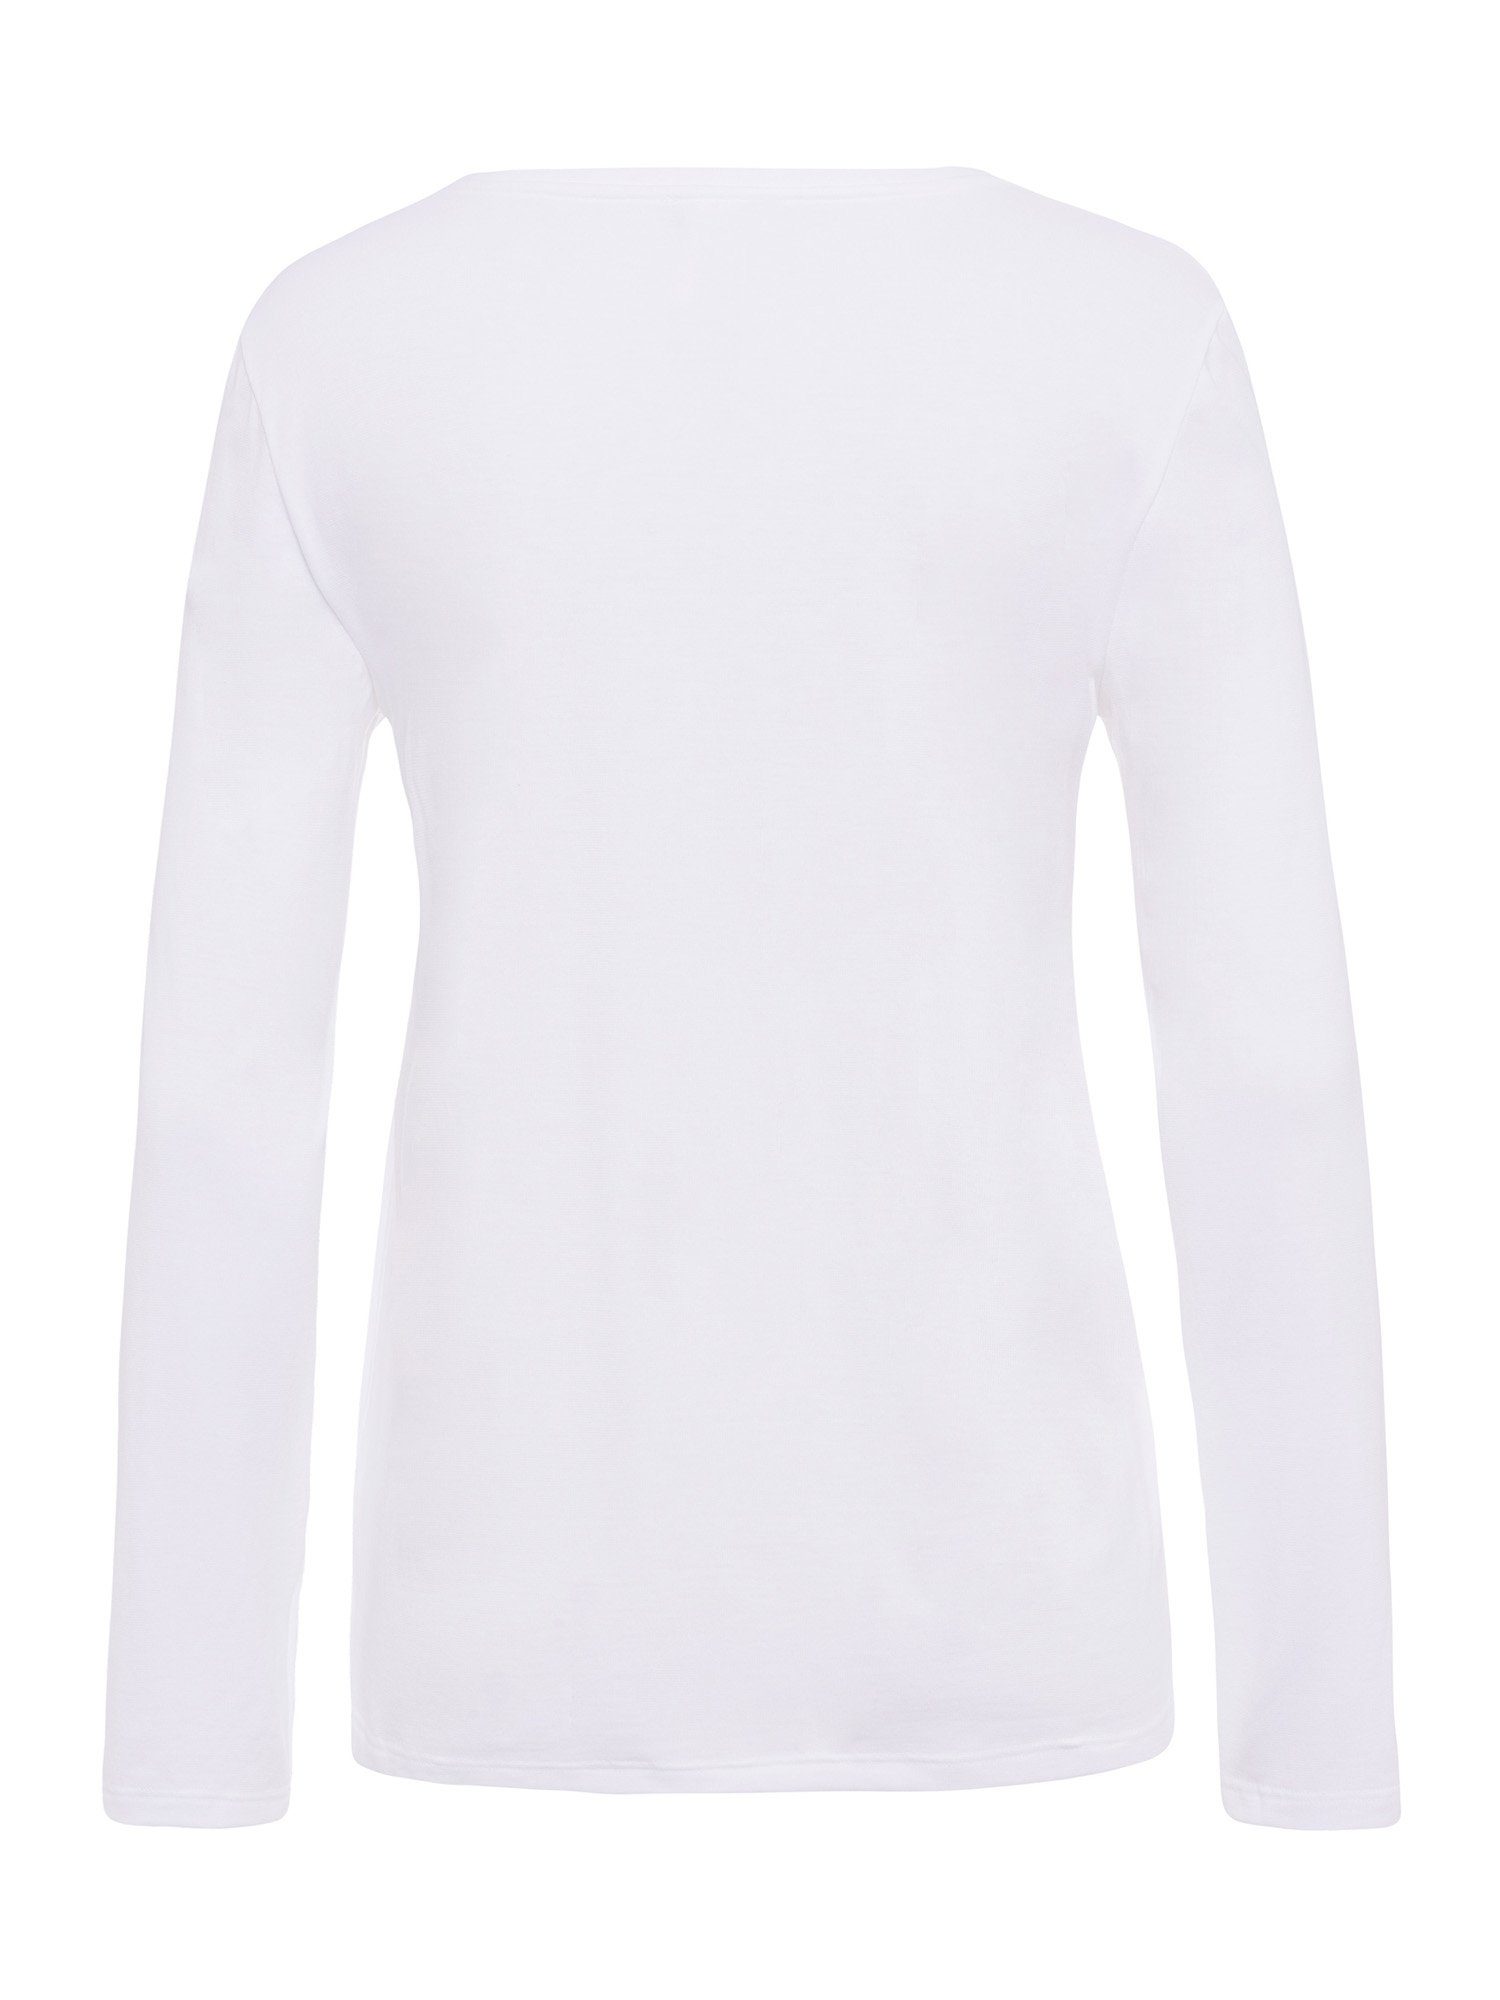 Hanro Pyjamaoberteil Sleep & langarm unterhemd shirt Lounge white